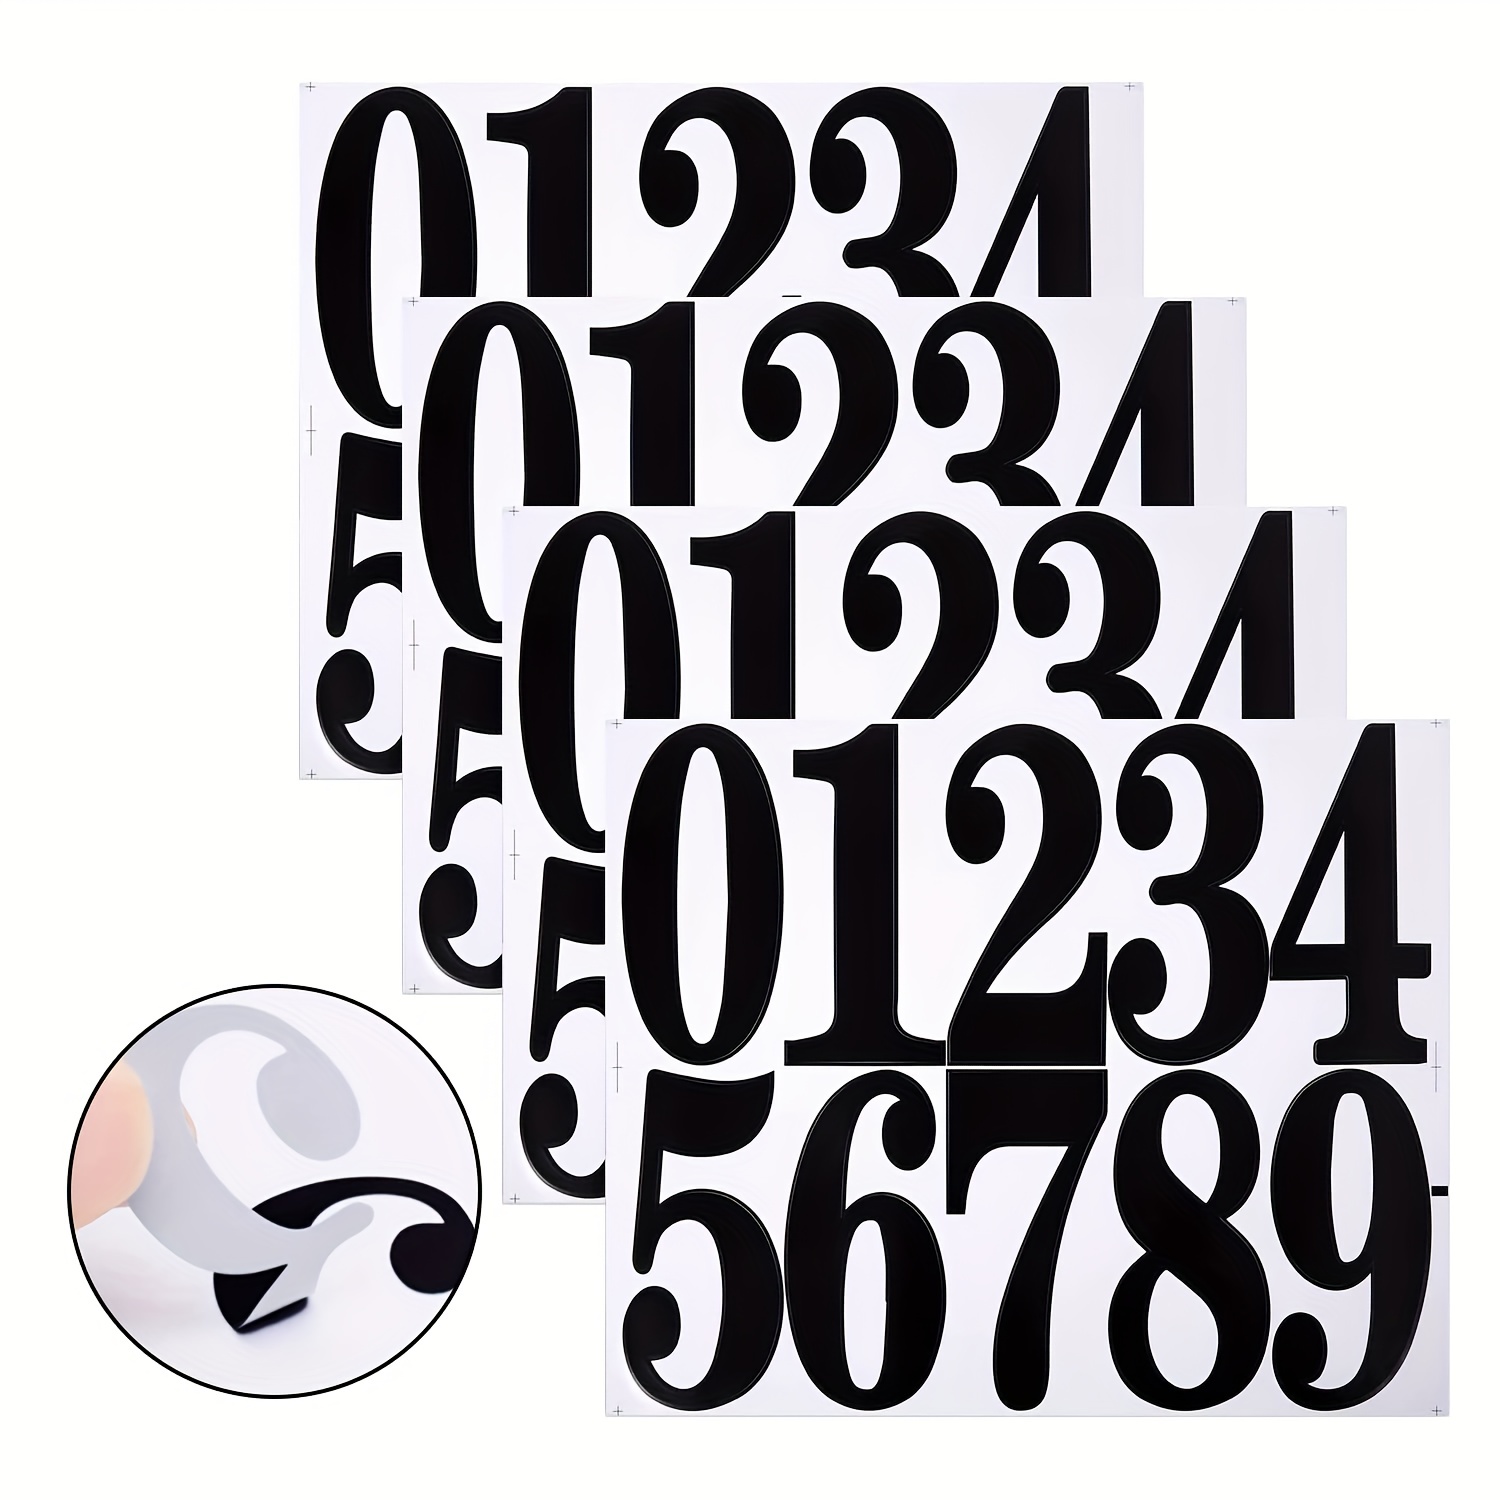 Large Number Stickers, Unique Designs